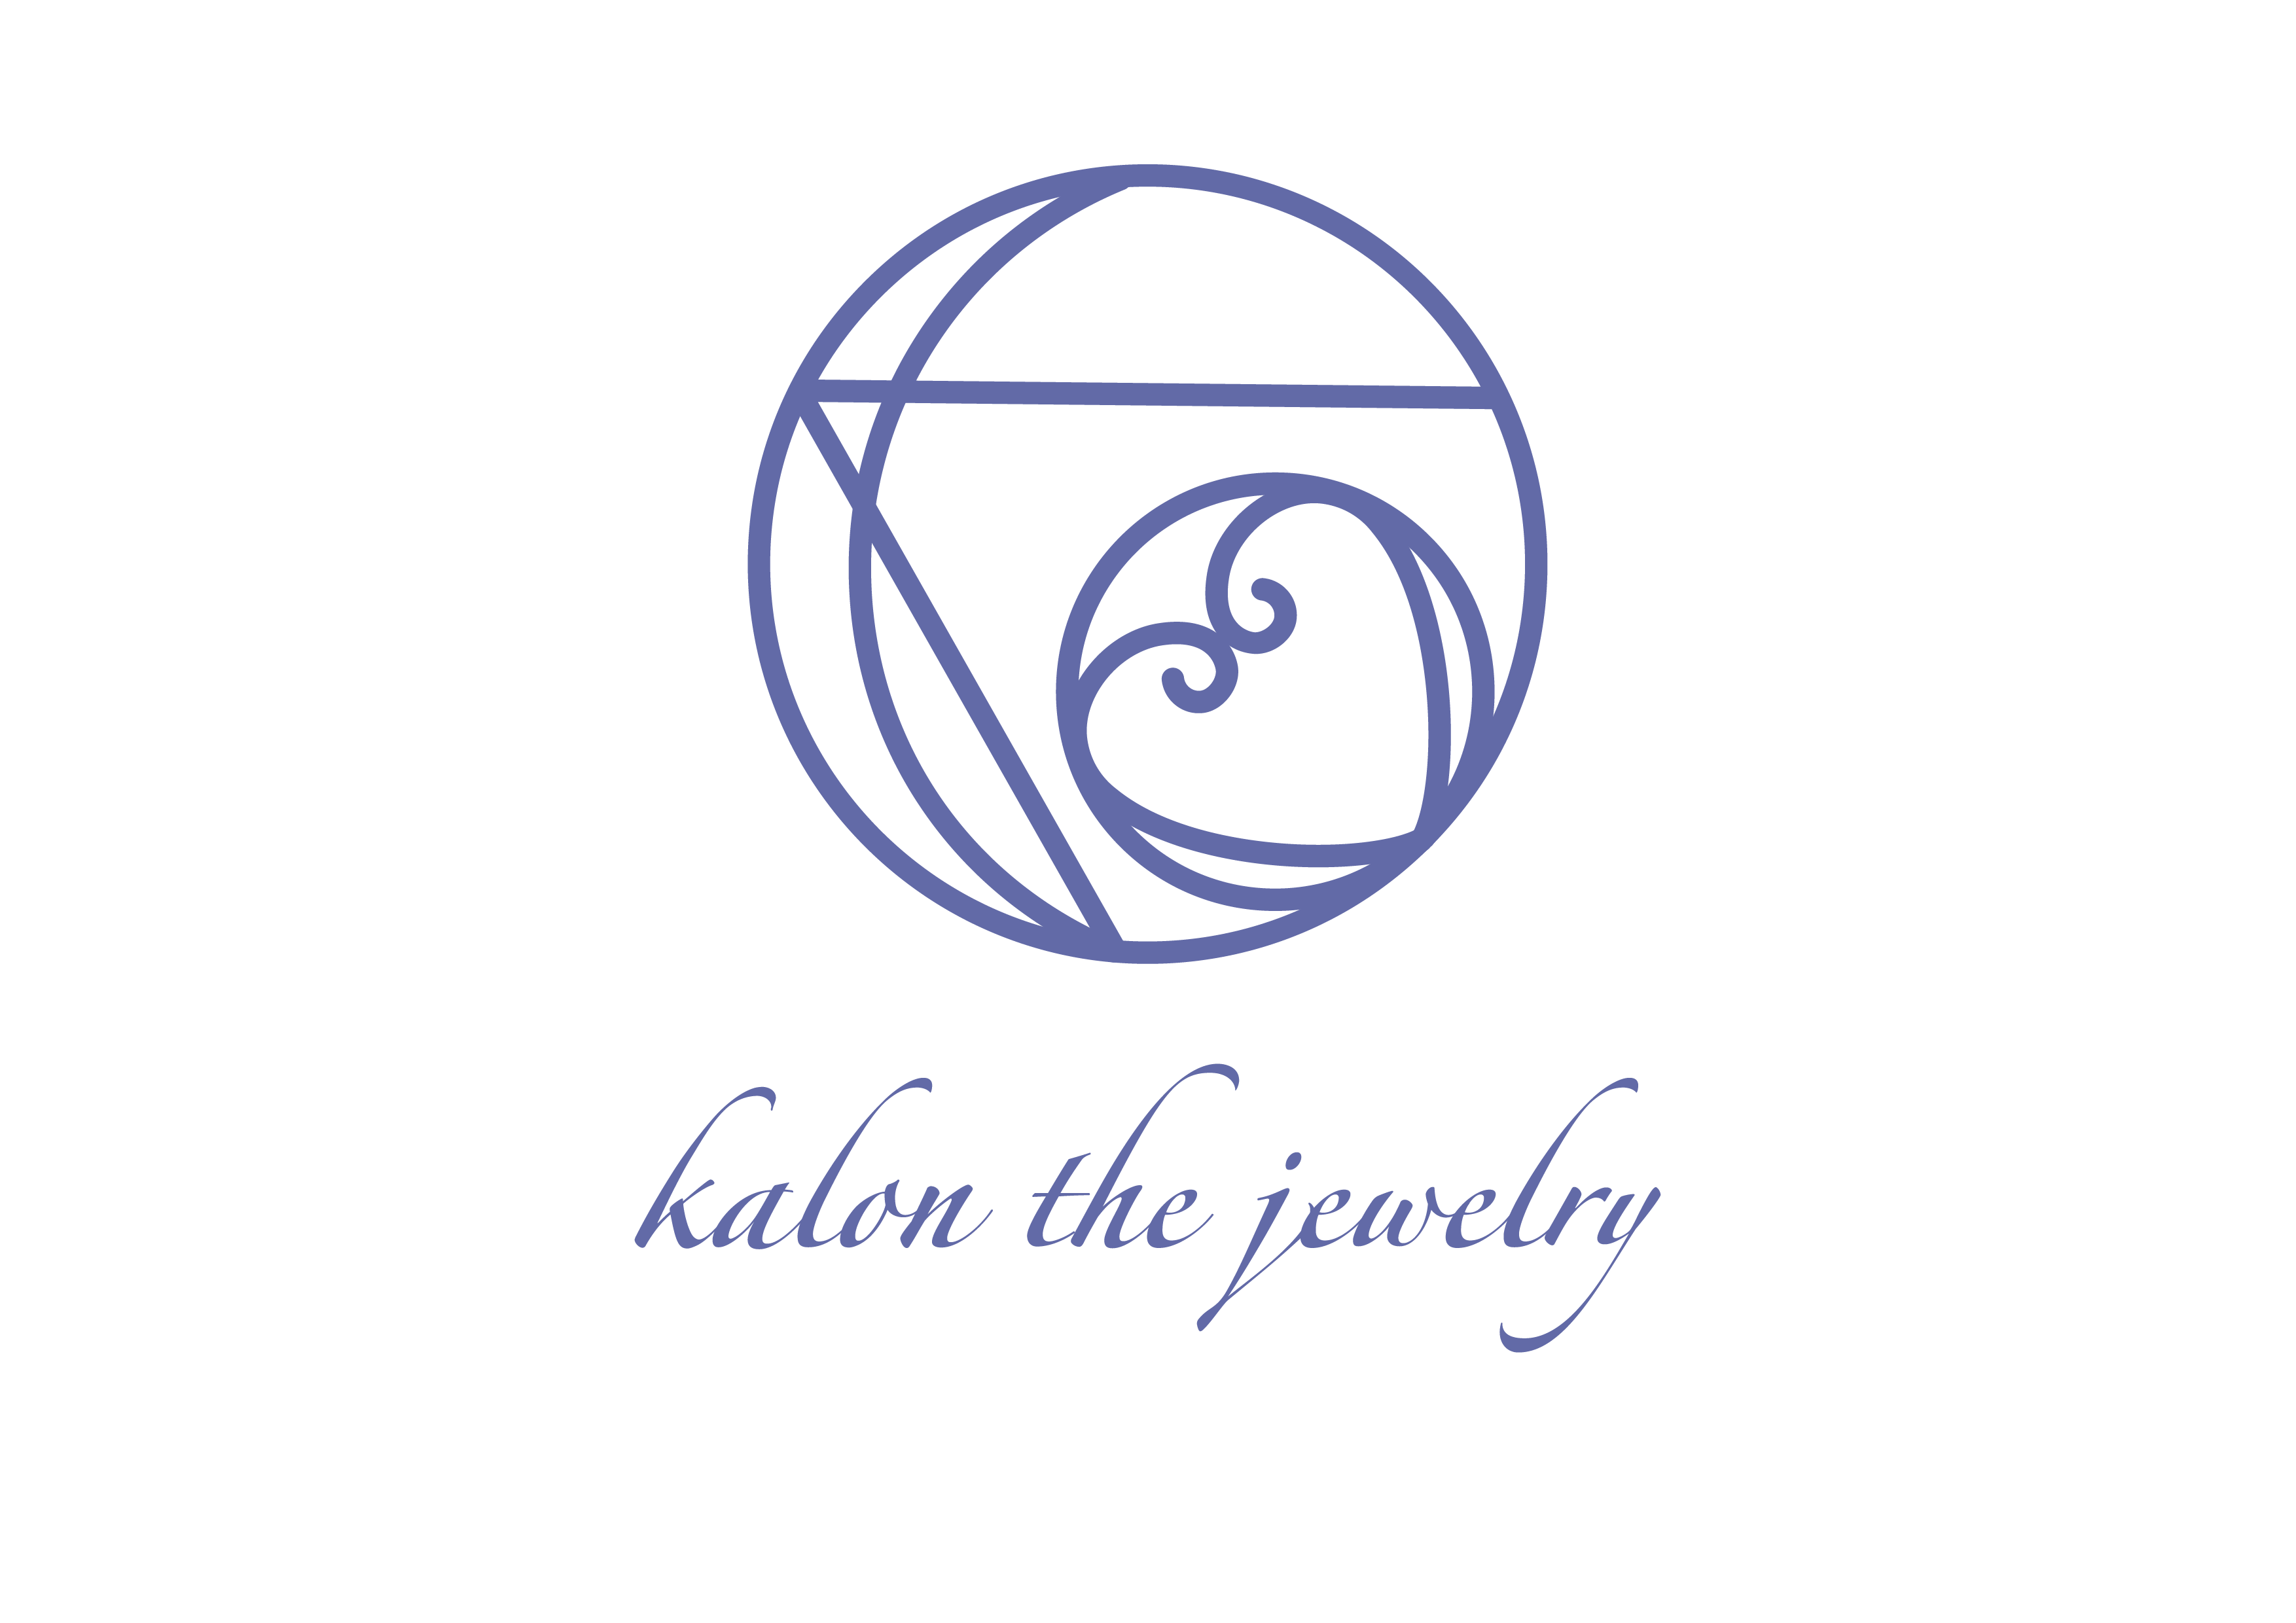 "kalon the jewelry"